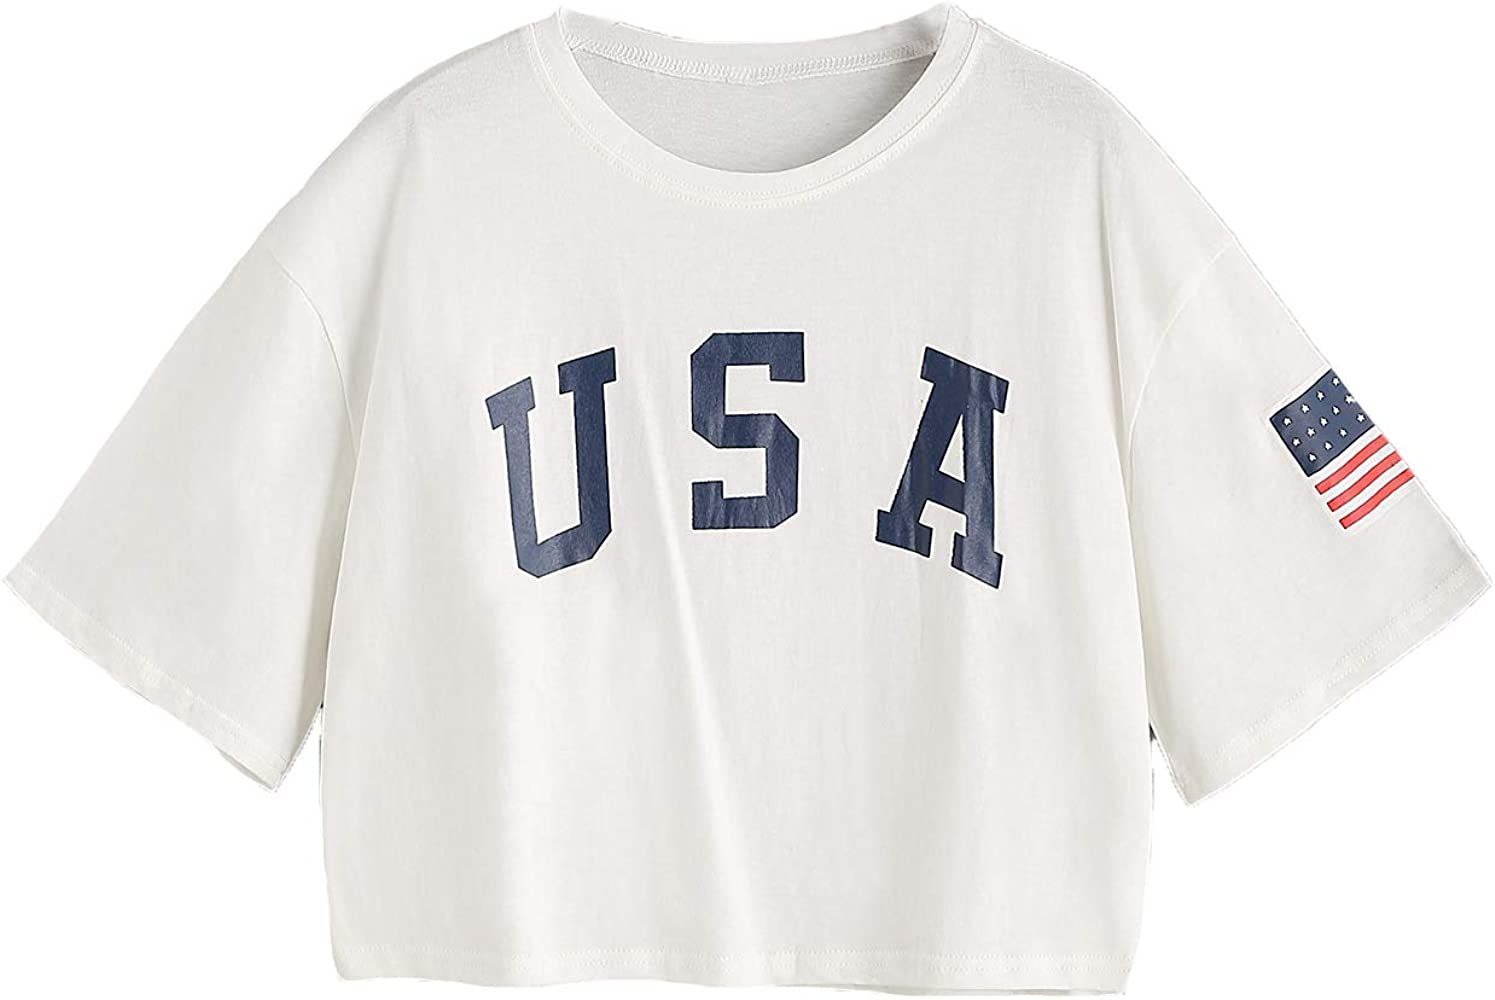 SweatyRocks Women's Letter Print Crop Tops Summer Short Sleeve T-shirt Bright White XL | Amazon (US)